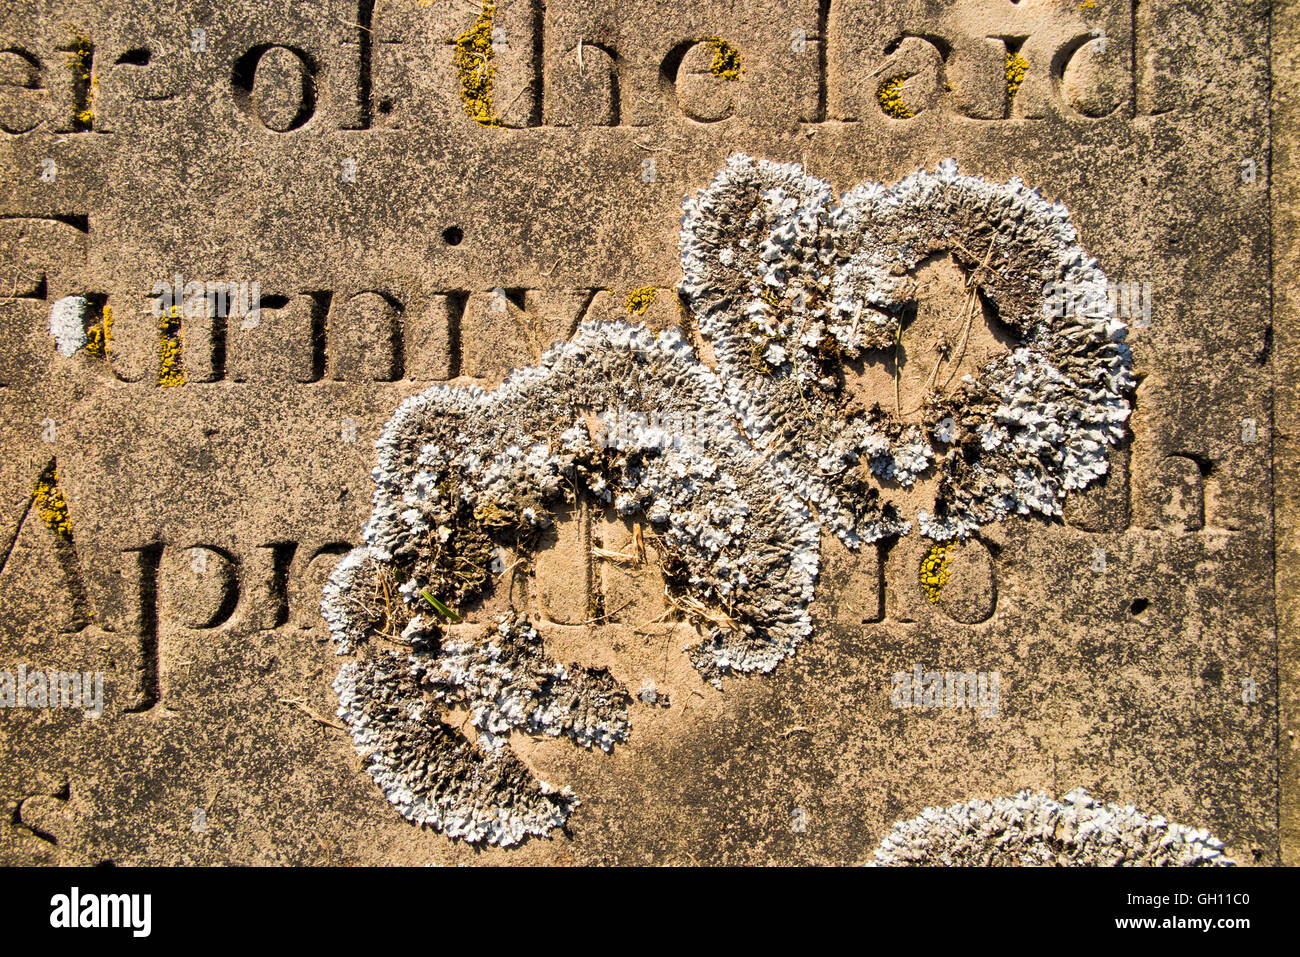 UK, England, Cheshire, Astbury, St Mary’s Churchyard, lichen colony growing on old gravestone Stock Photo